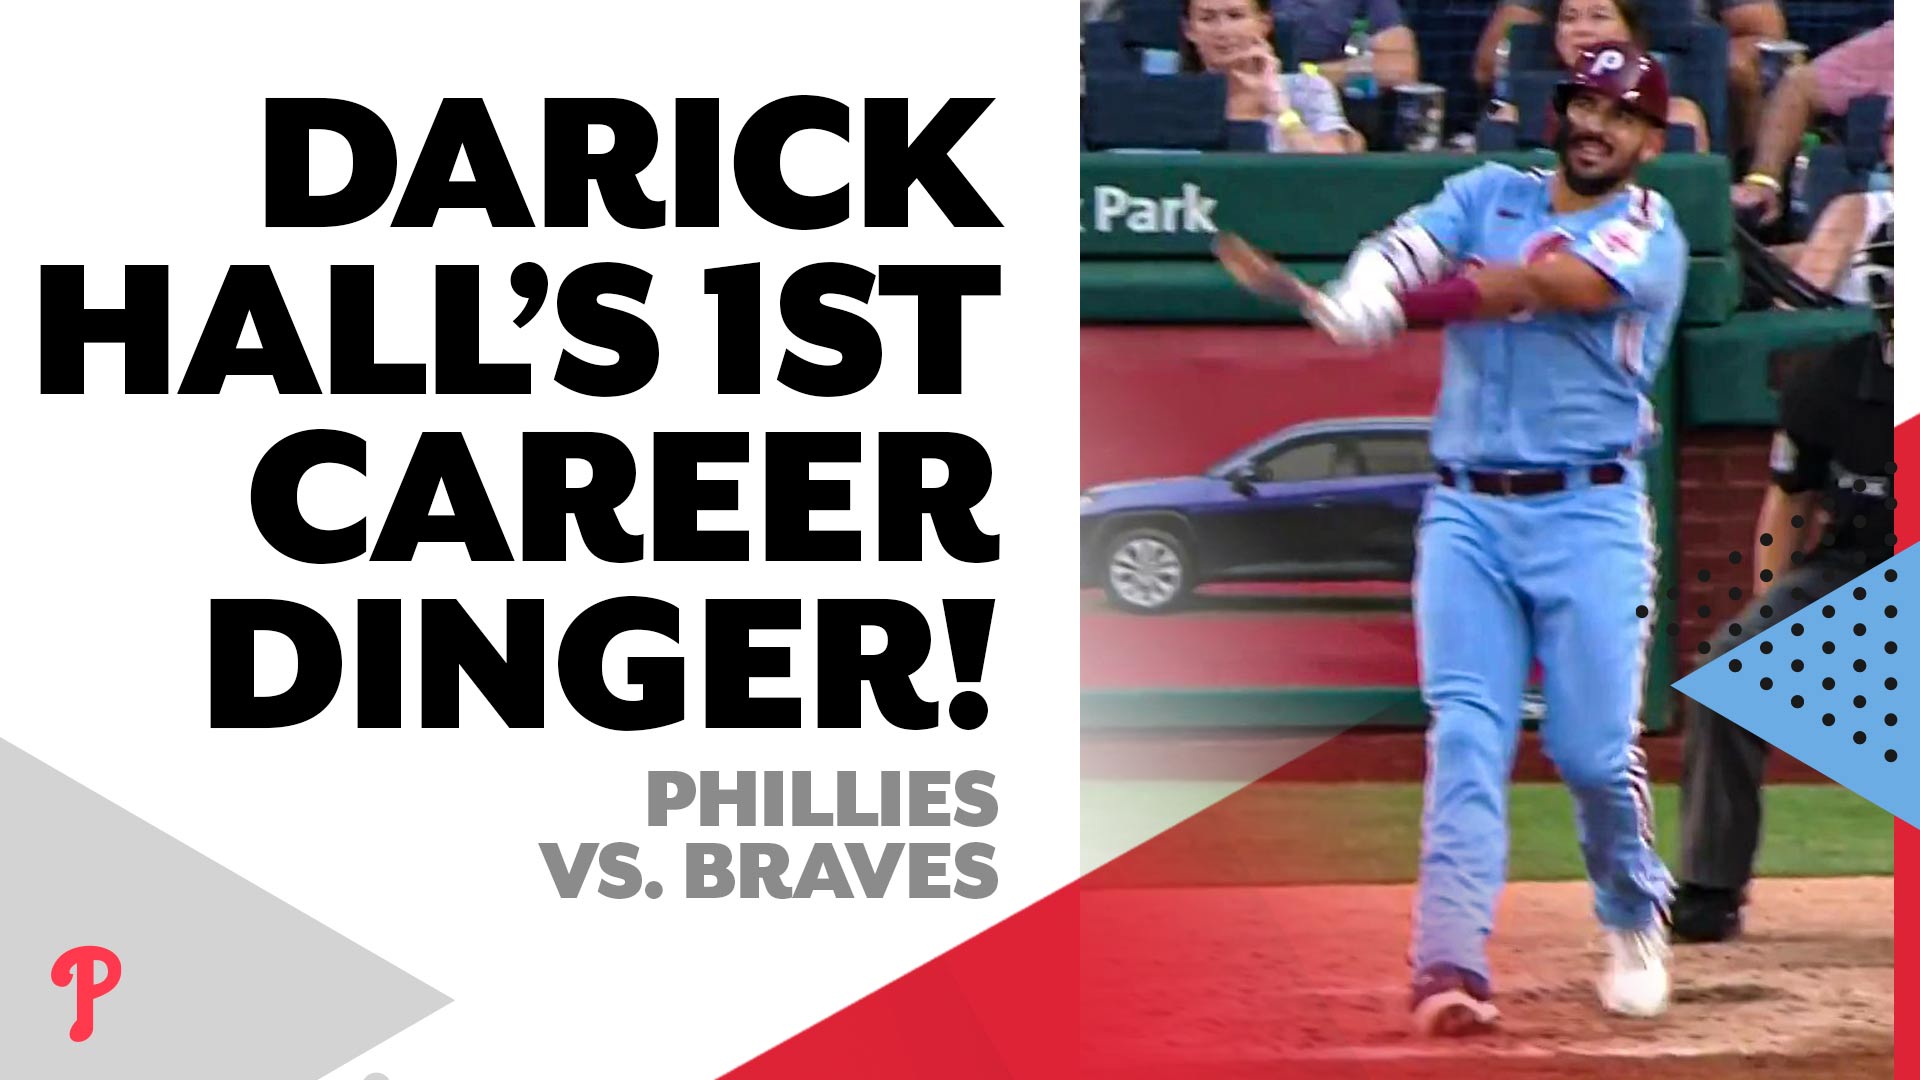 Darick Hall hits third career home run in Phillies win